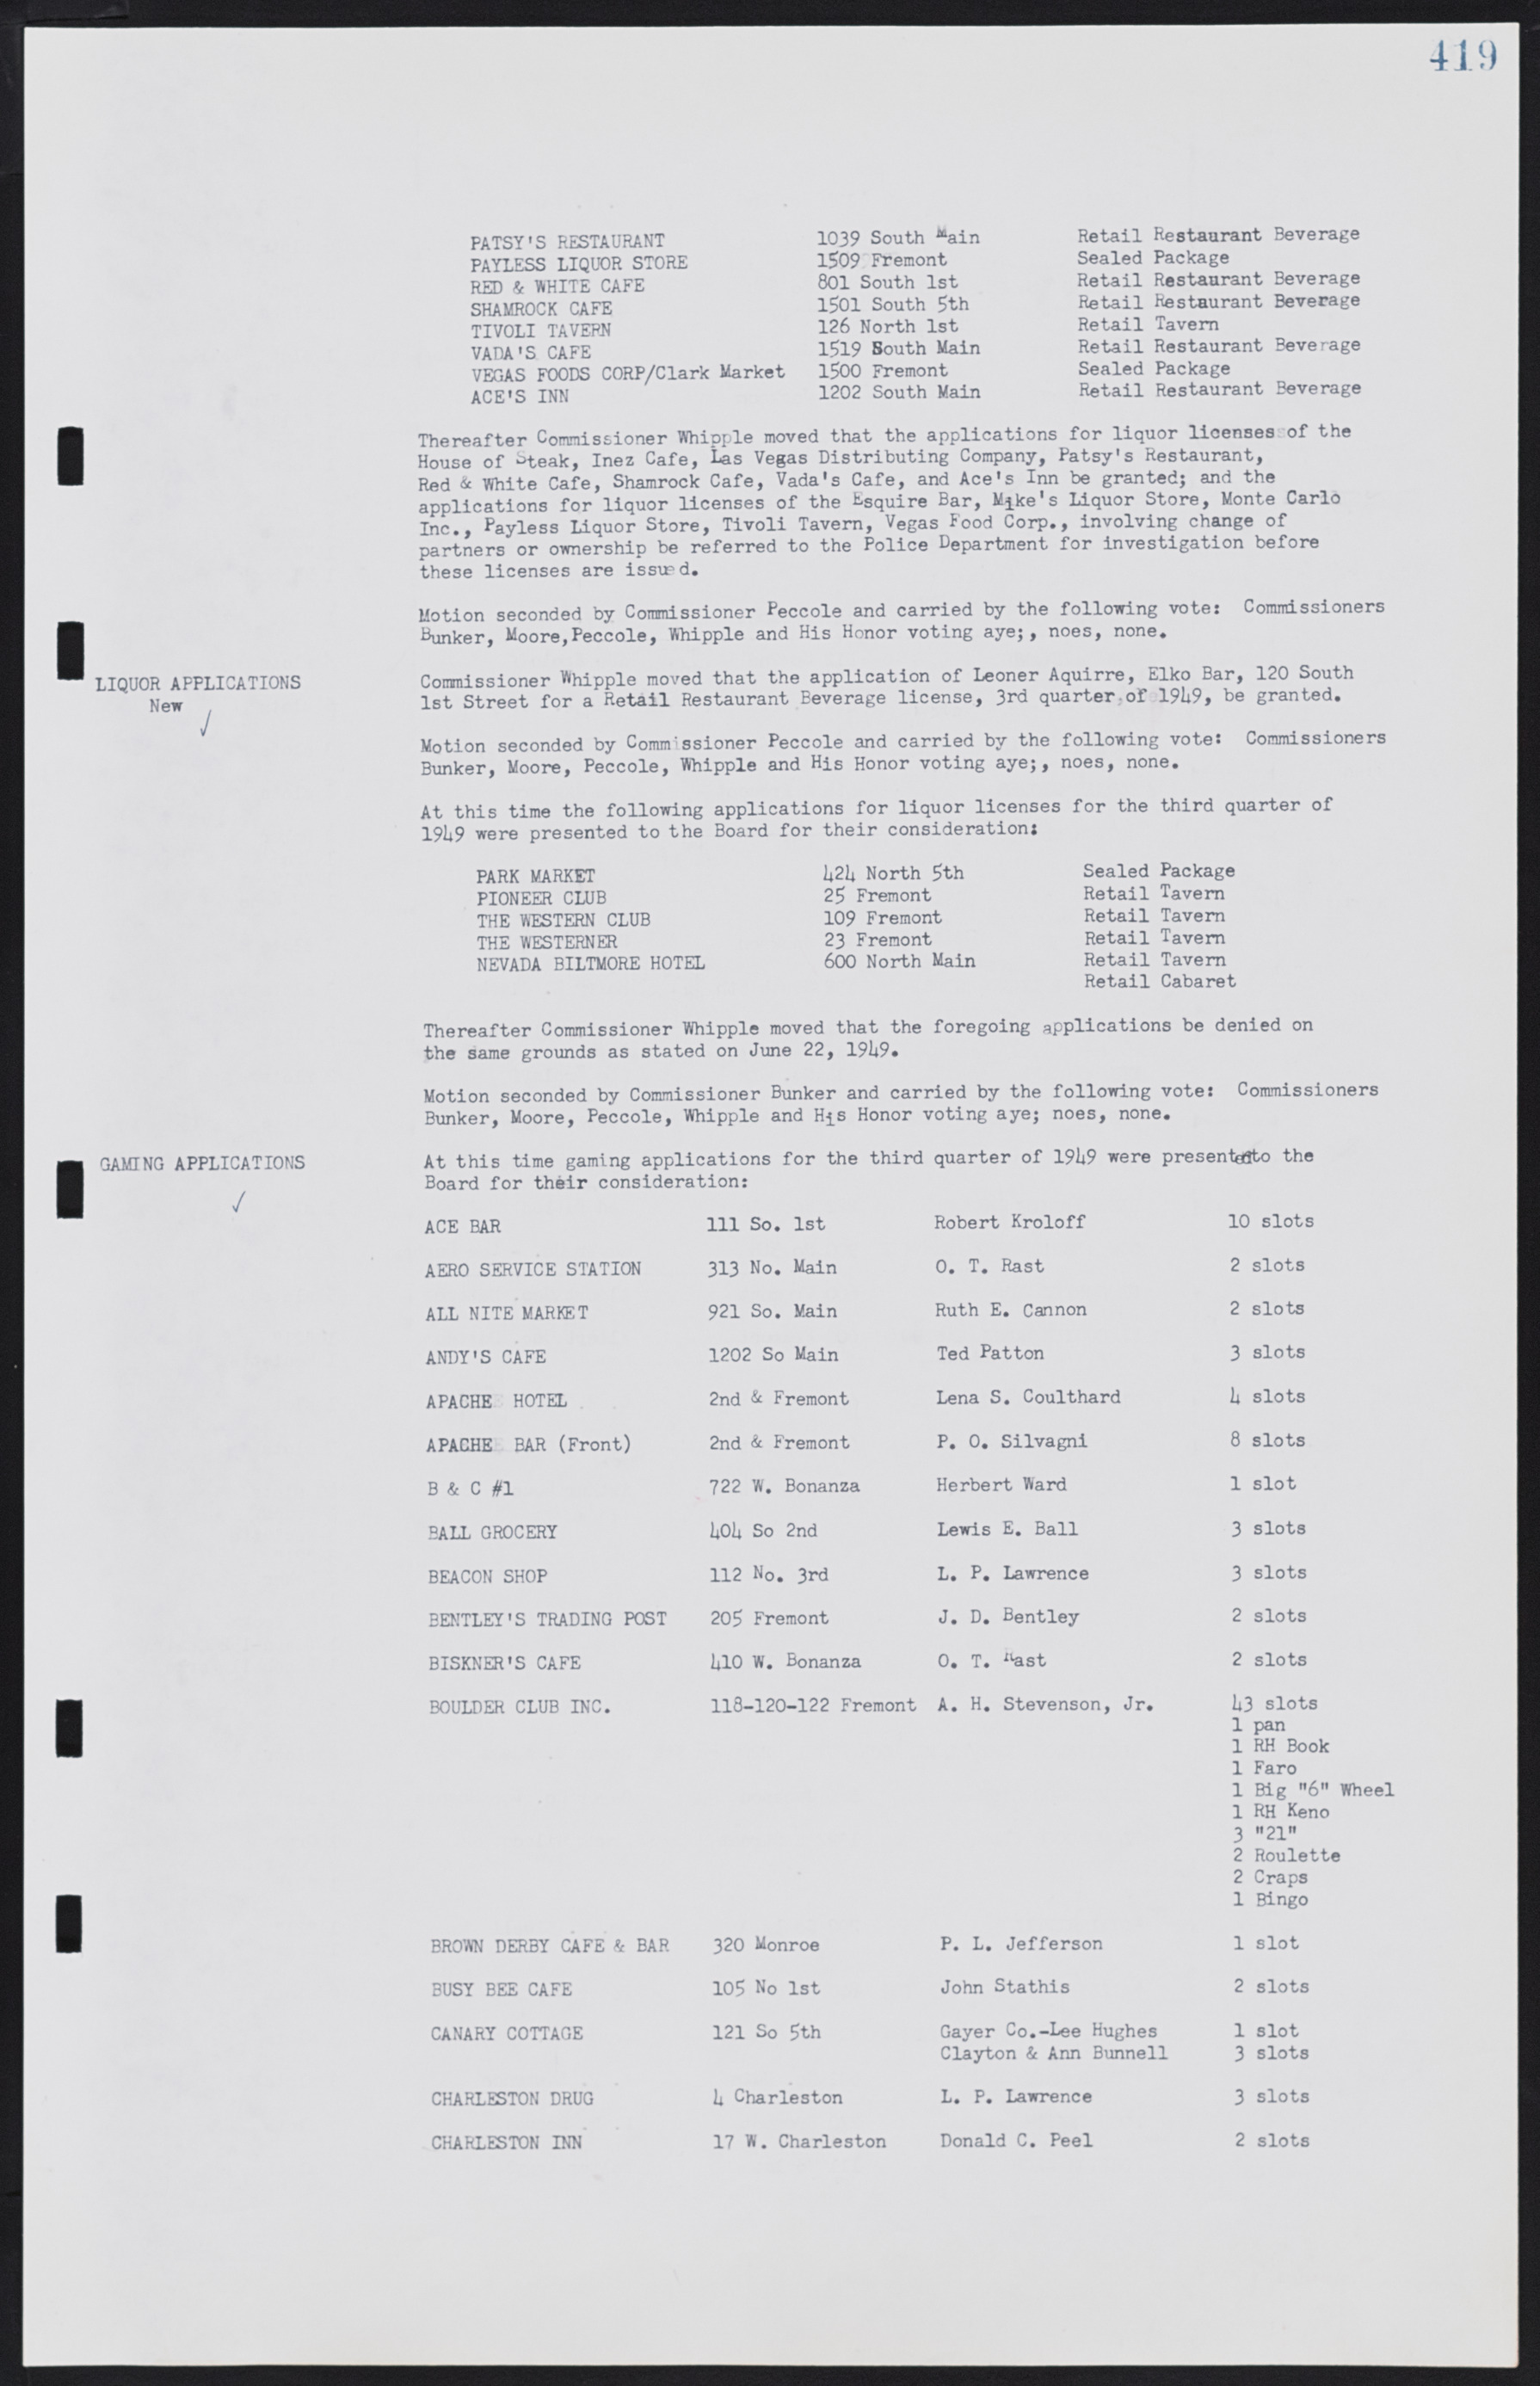 Las Vegas City Commission Minutes, January 7, 1947 to October 26, 1949, lvc000006-449